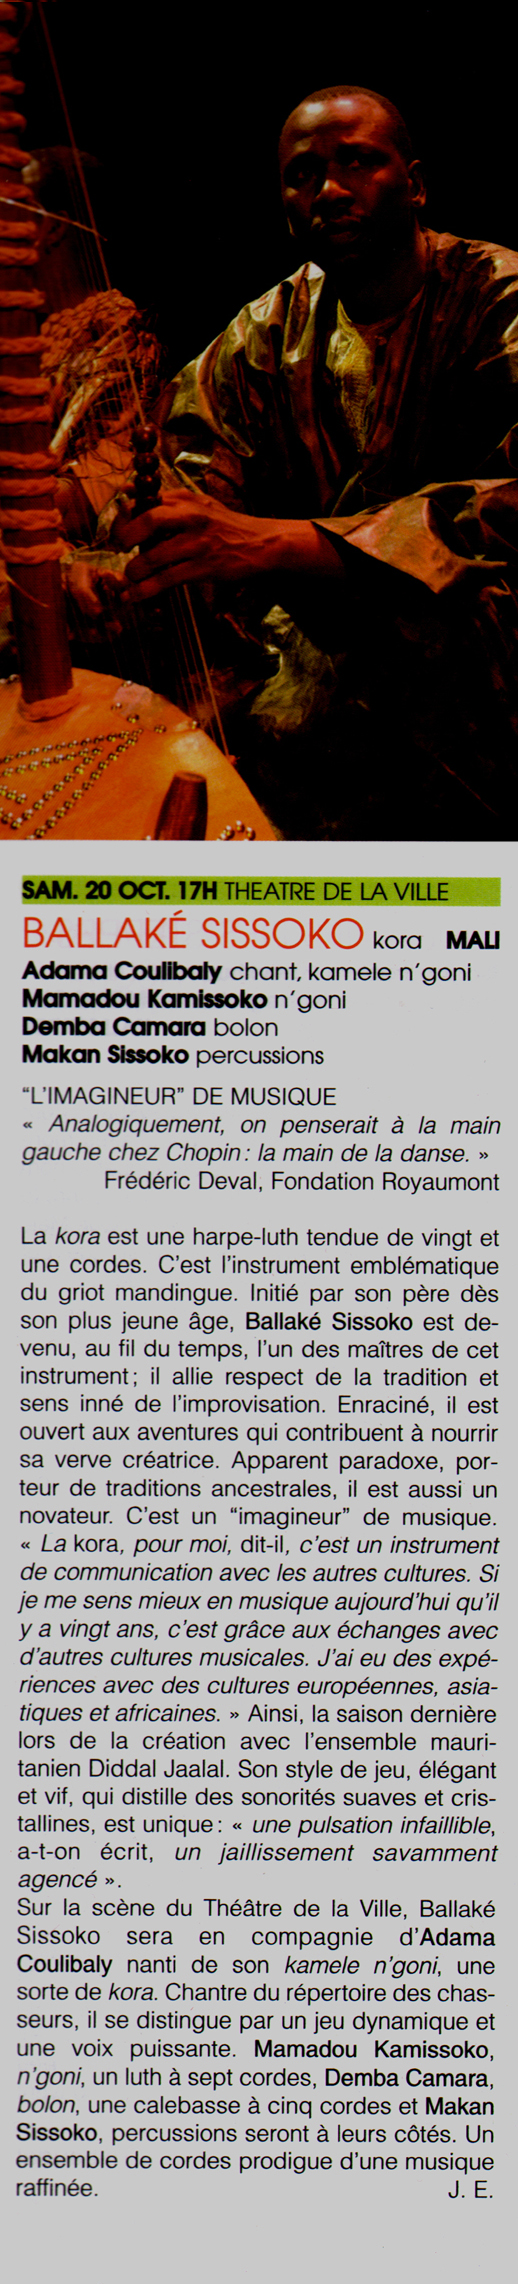 Ballake-Sissoko